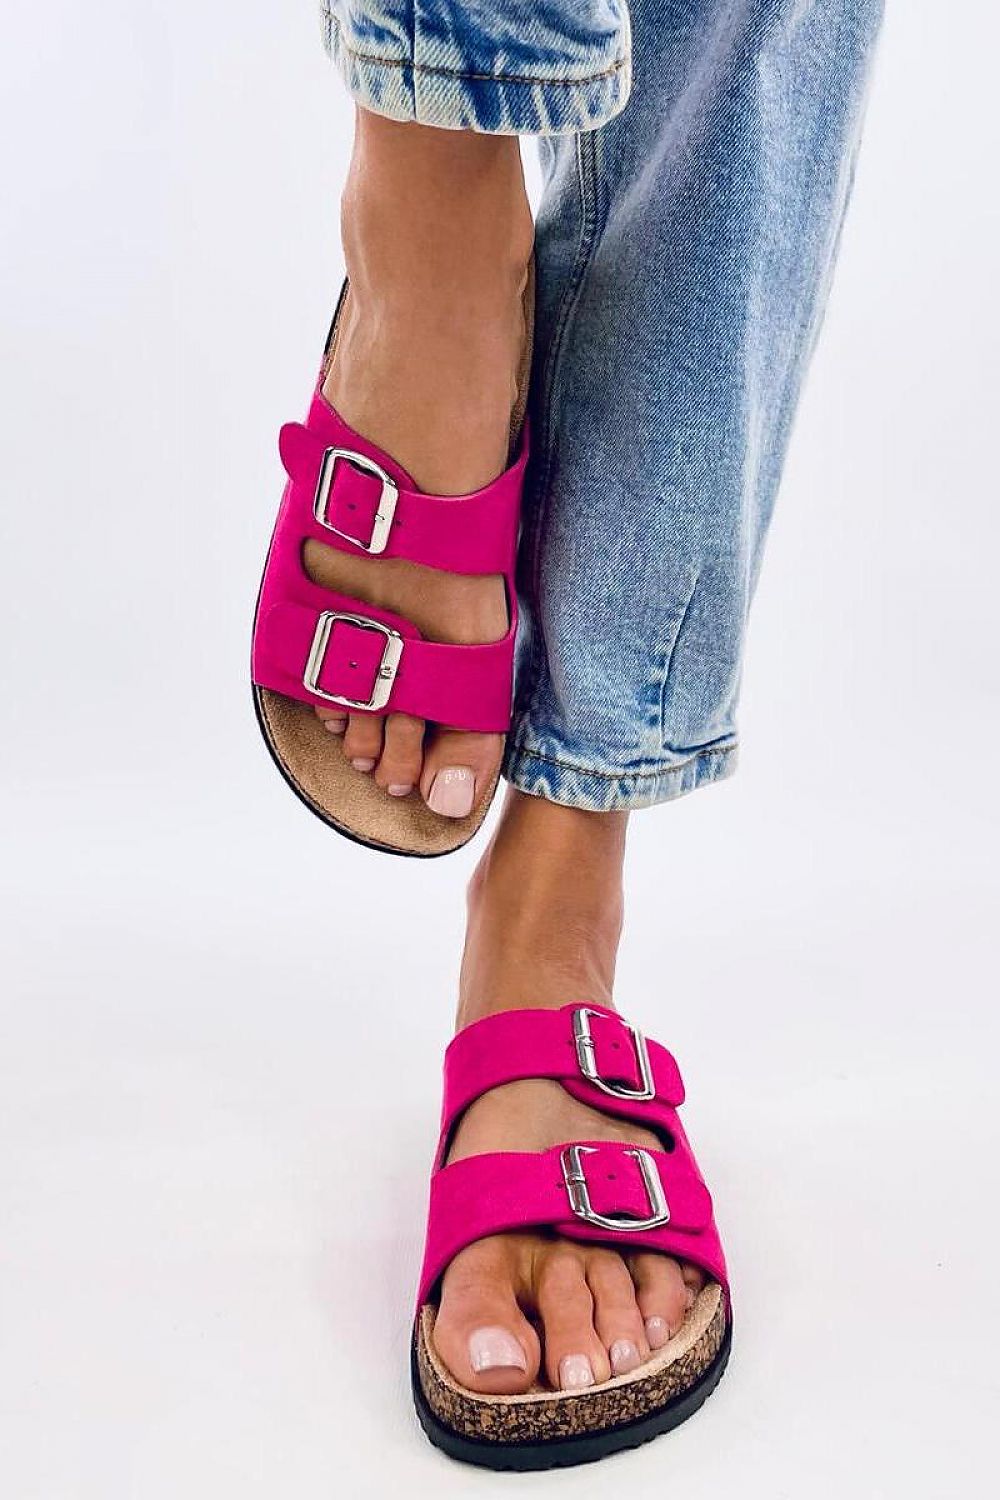 TEEK - Pink Double Buckle Cork Sole Sandals SHOES TEEK MH 5.5  